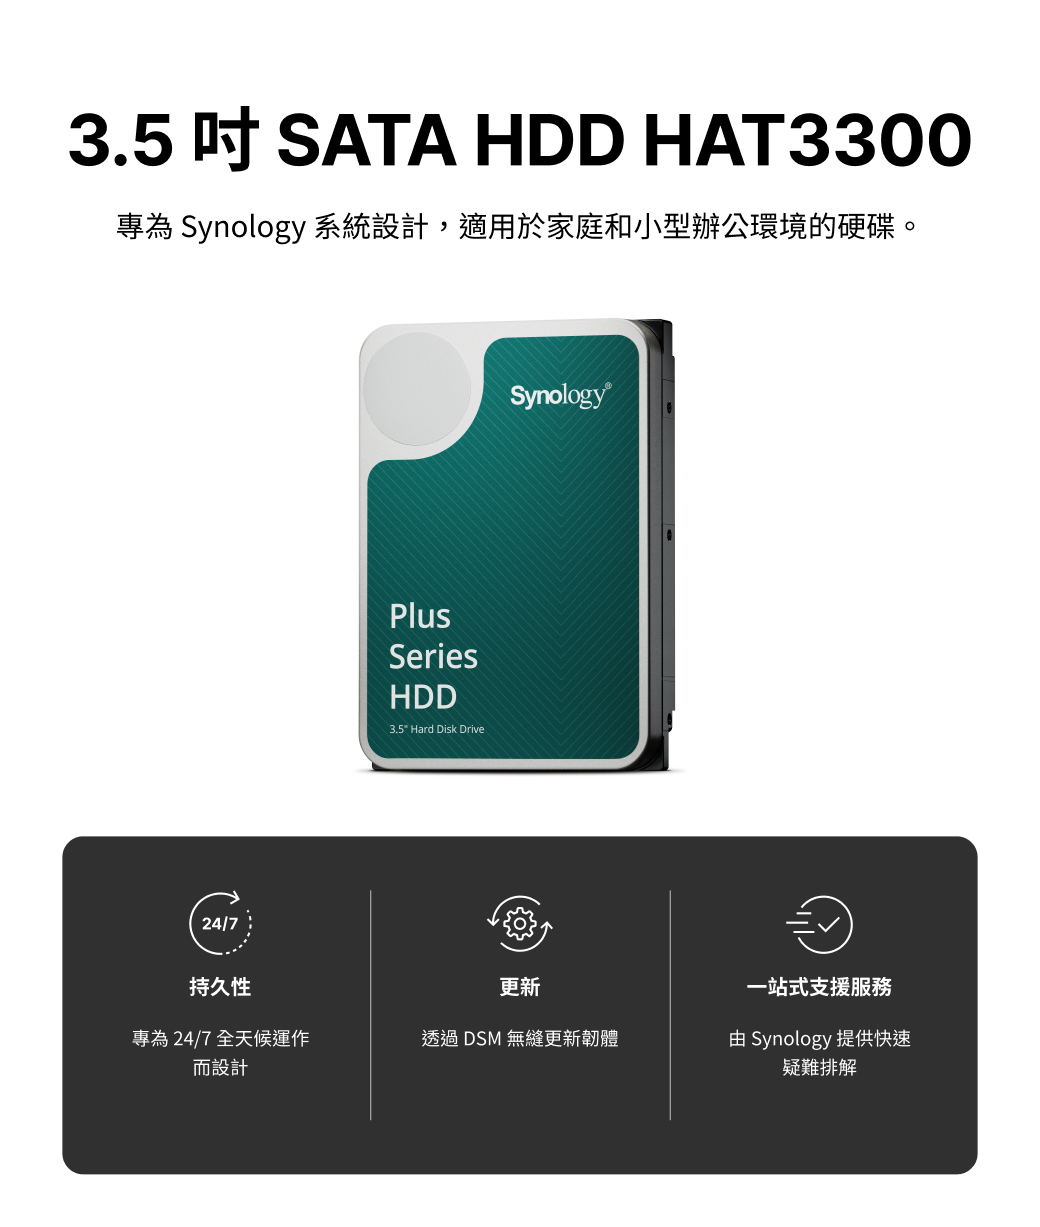 3.5  SATA HDD HAT3300專為 Synology 系統設計,適用於家庭和小型辦公環境的硬碟。24/7PlusSeriesHDD3.5 Hard Disk DriveSynology®持久性更新一站式支援服務專為24/7 全天候運作而設計透過DSM 無縫更新韌體由 Synology 提供快速疑難排解